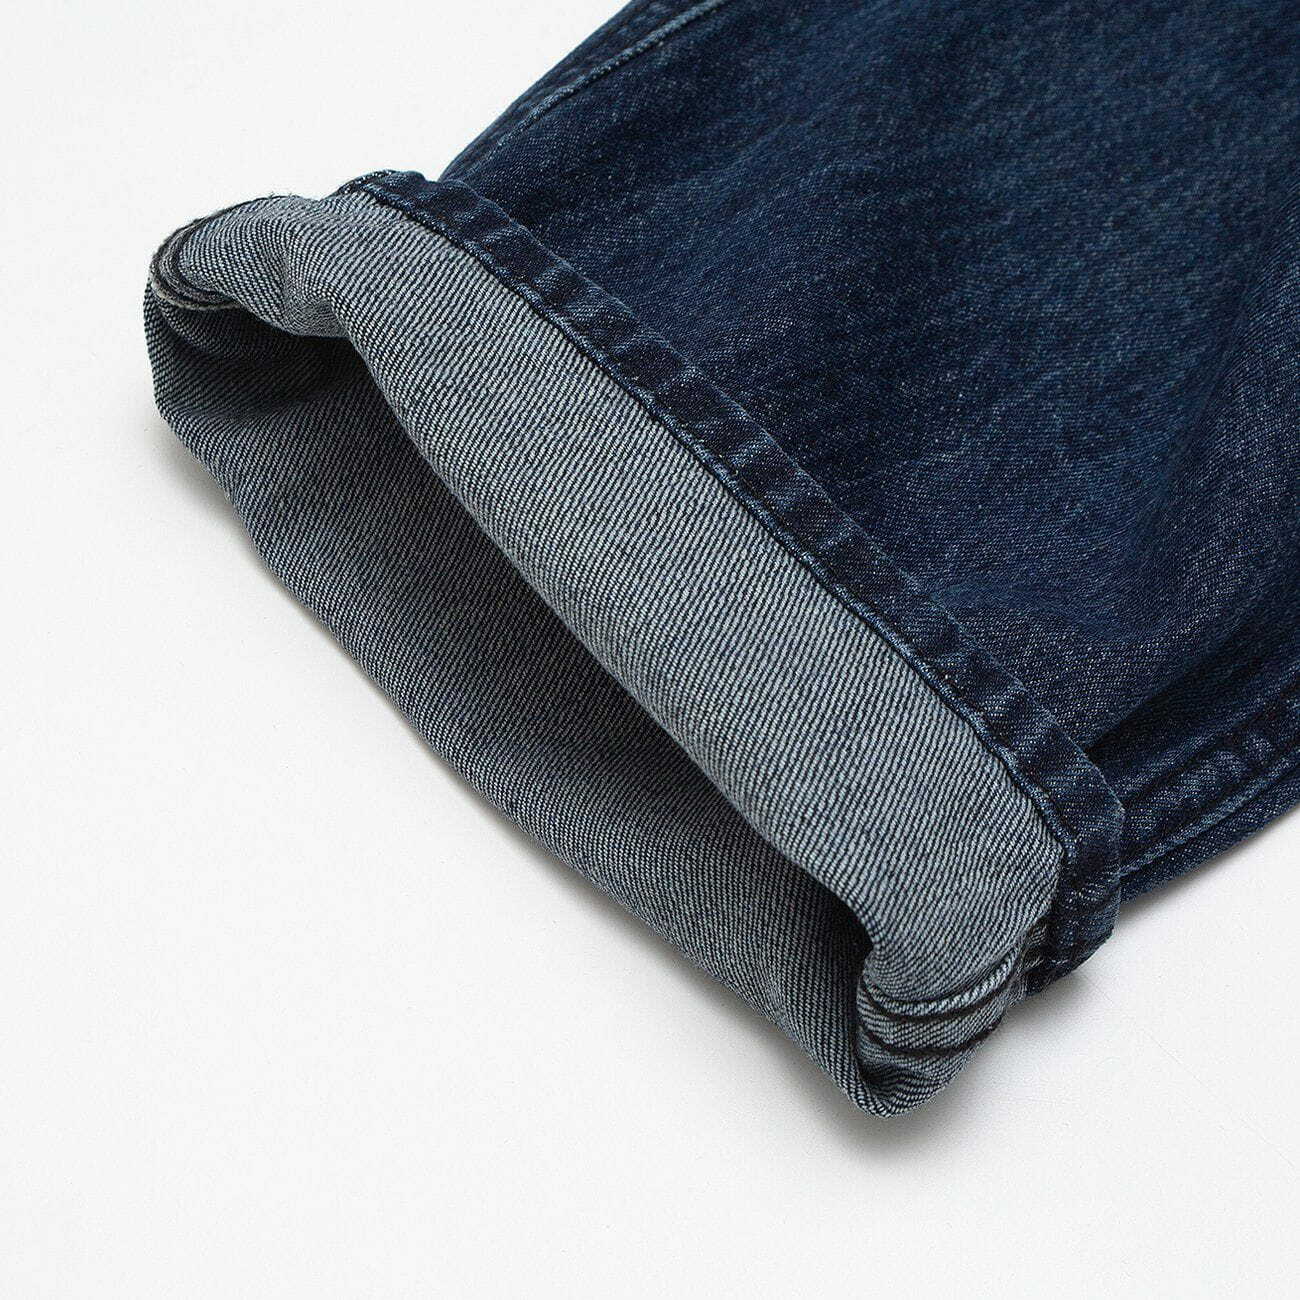 vintage denim patchwork jeans edgy streetwear essential 7577